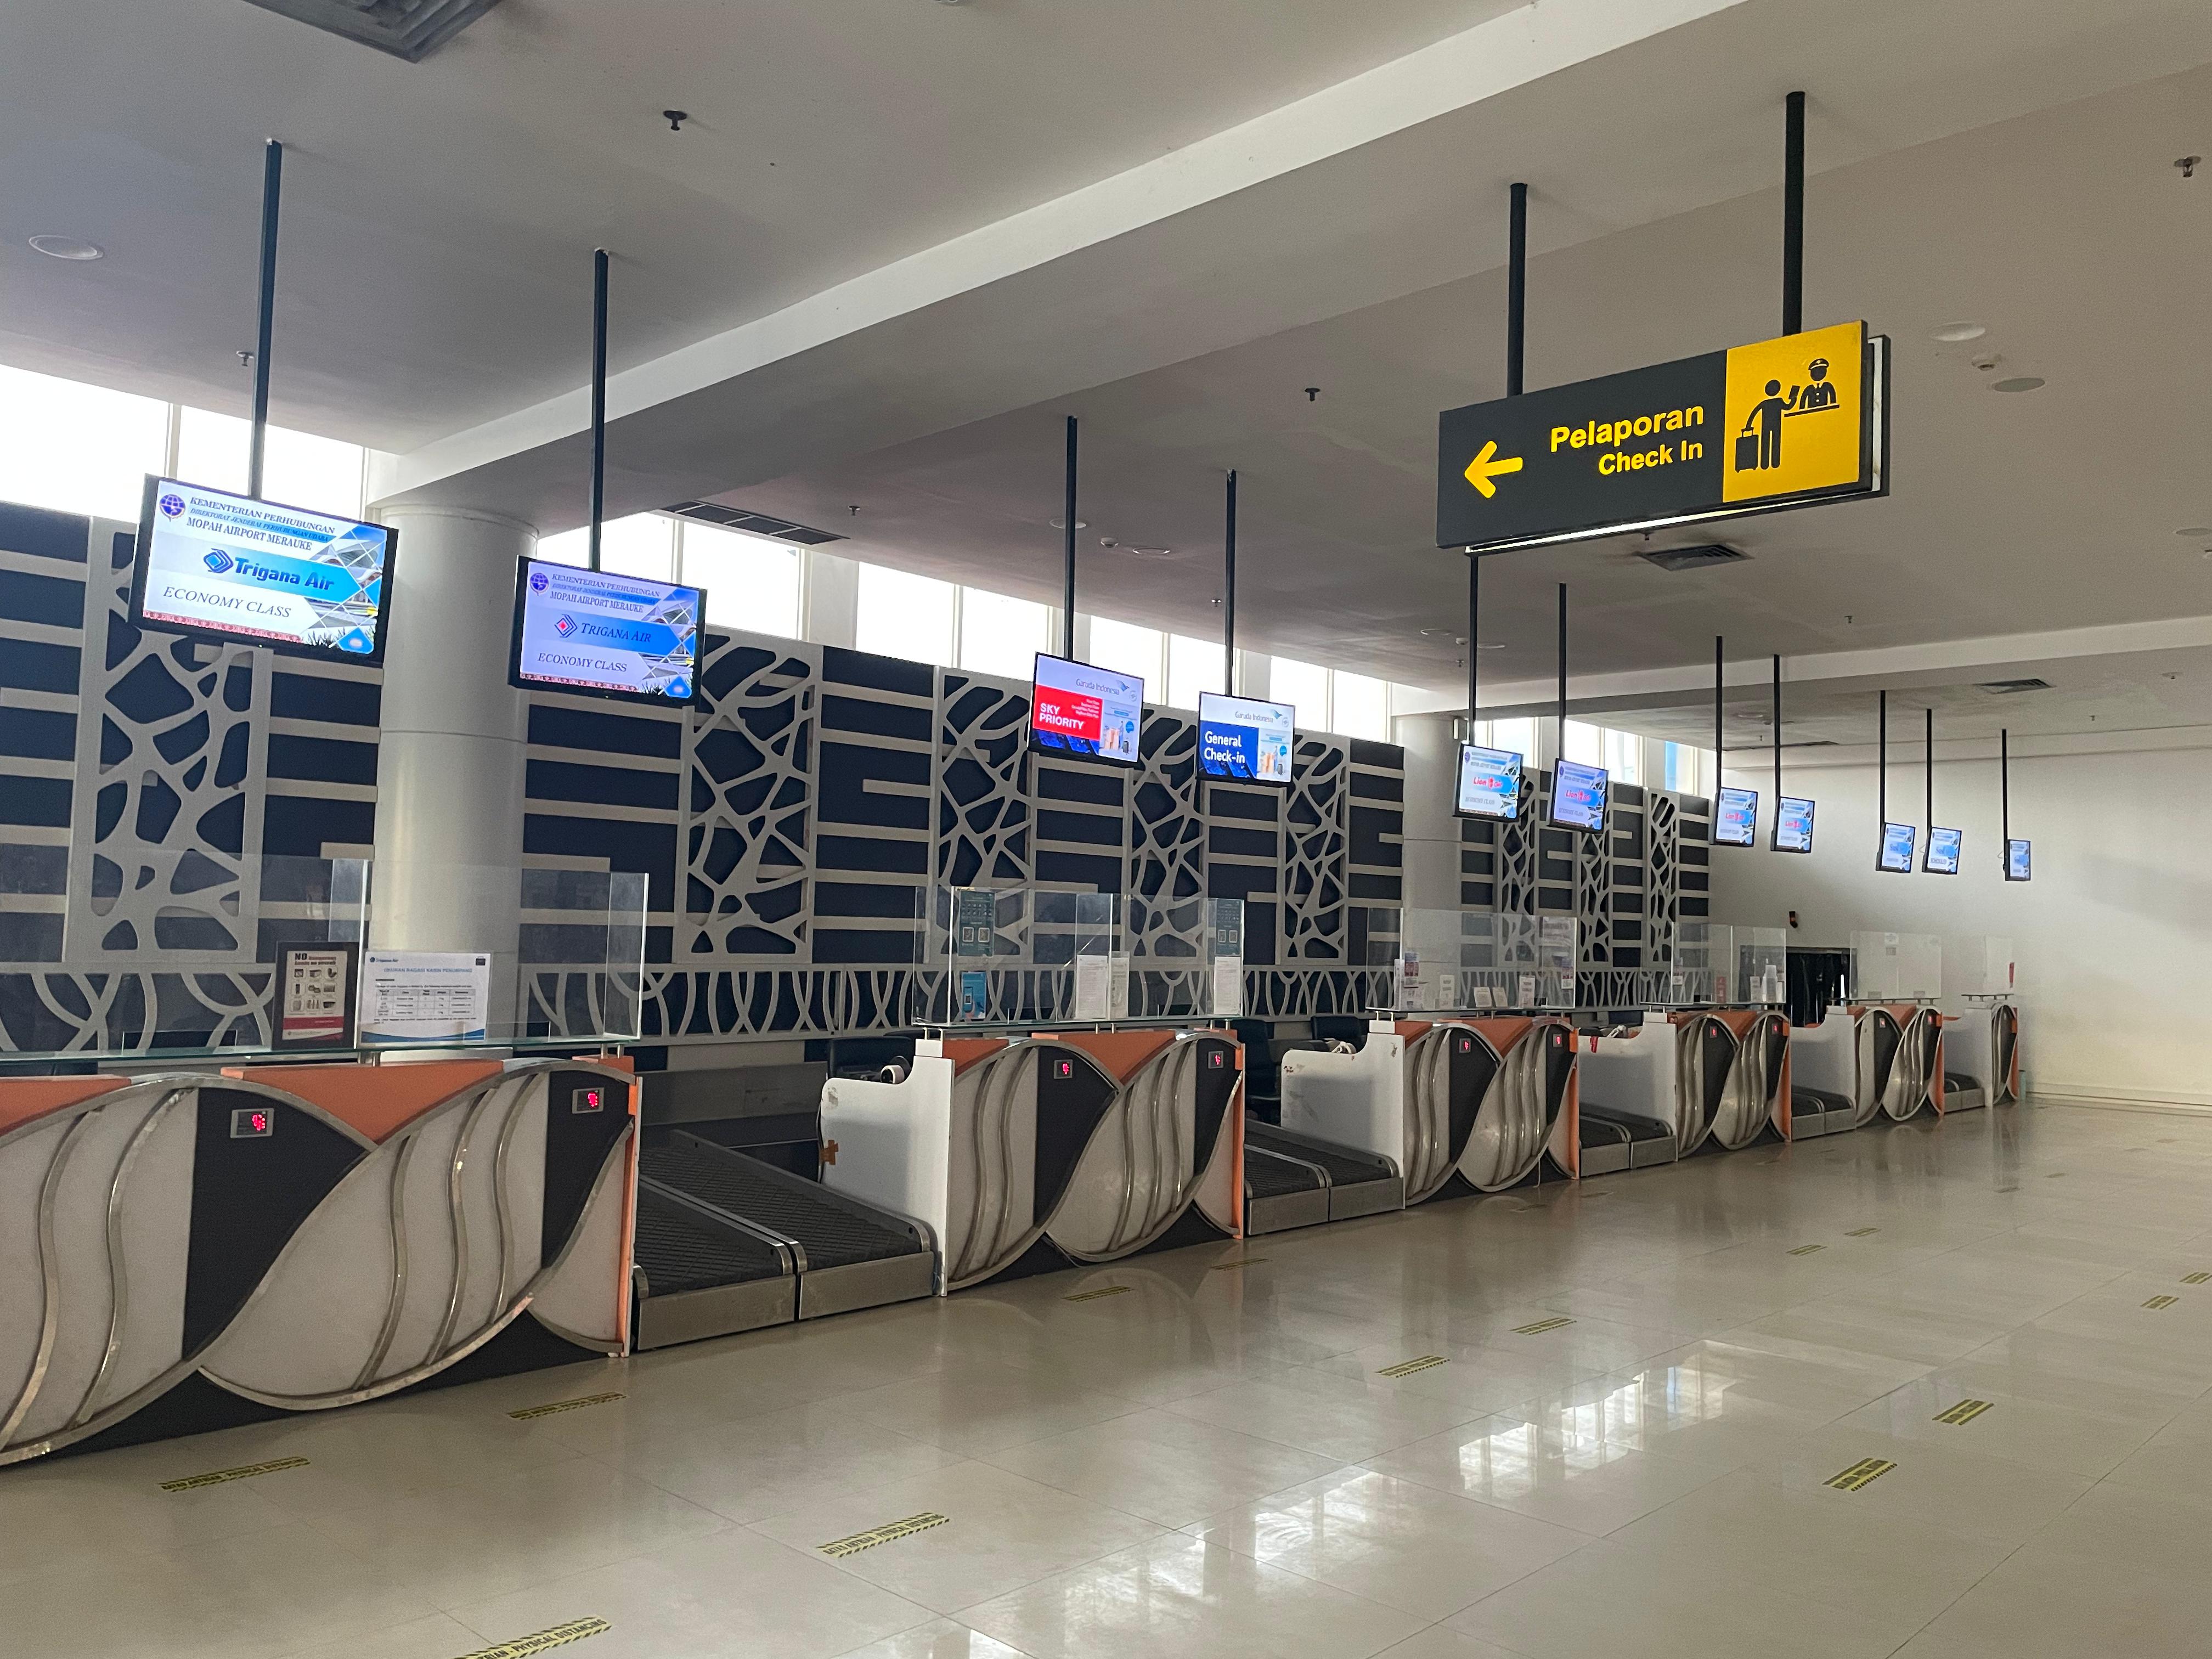 Foto Bandara Check-in Counter